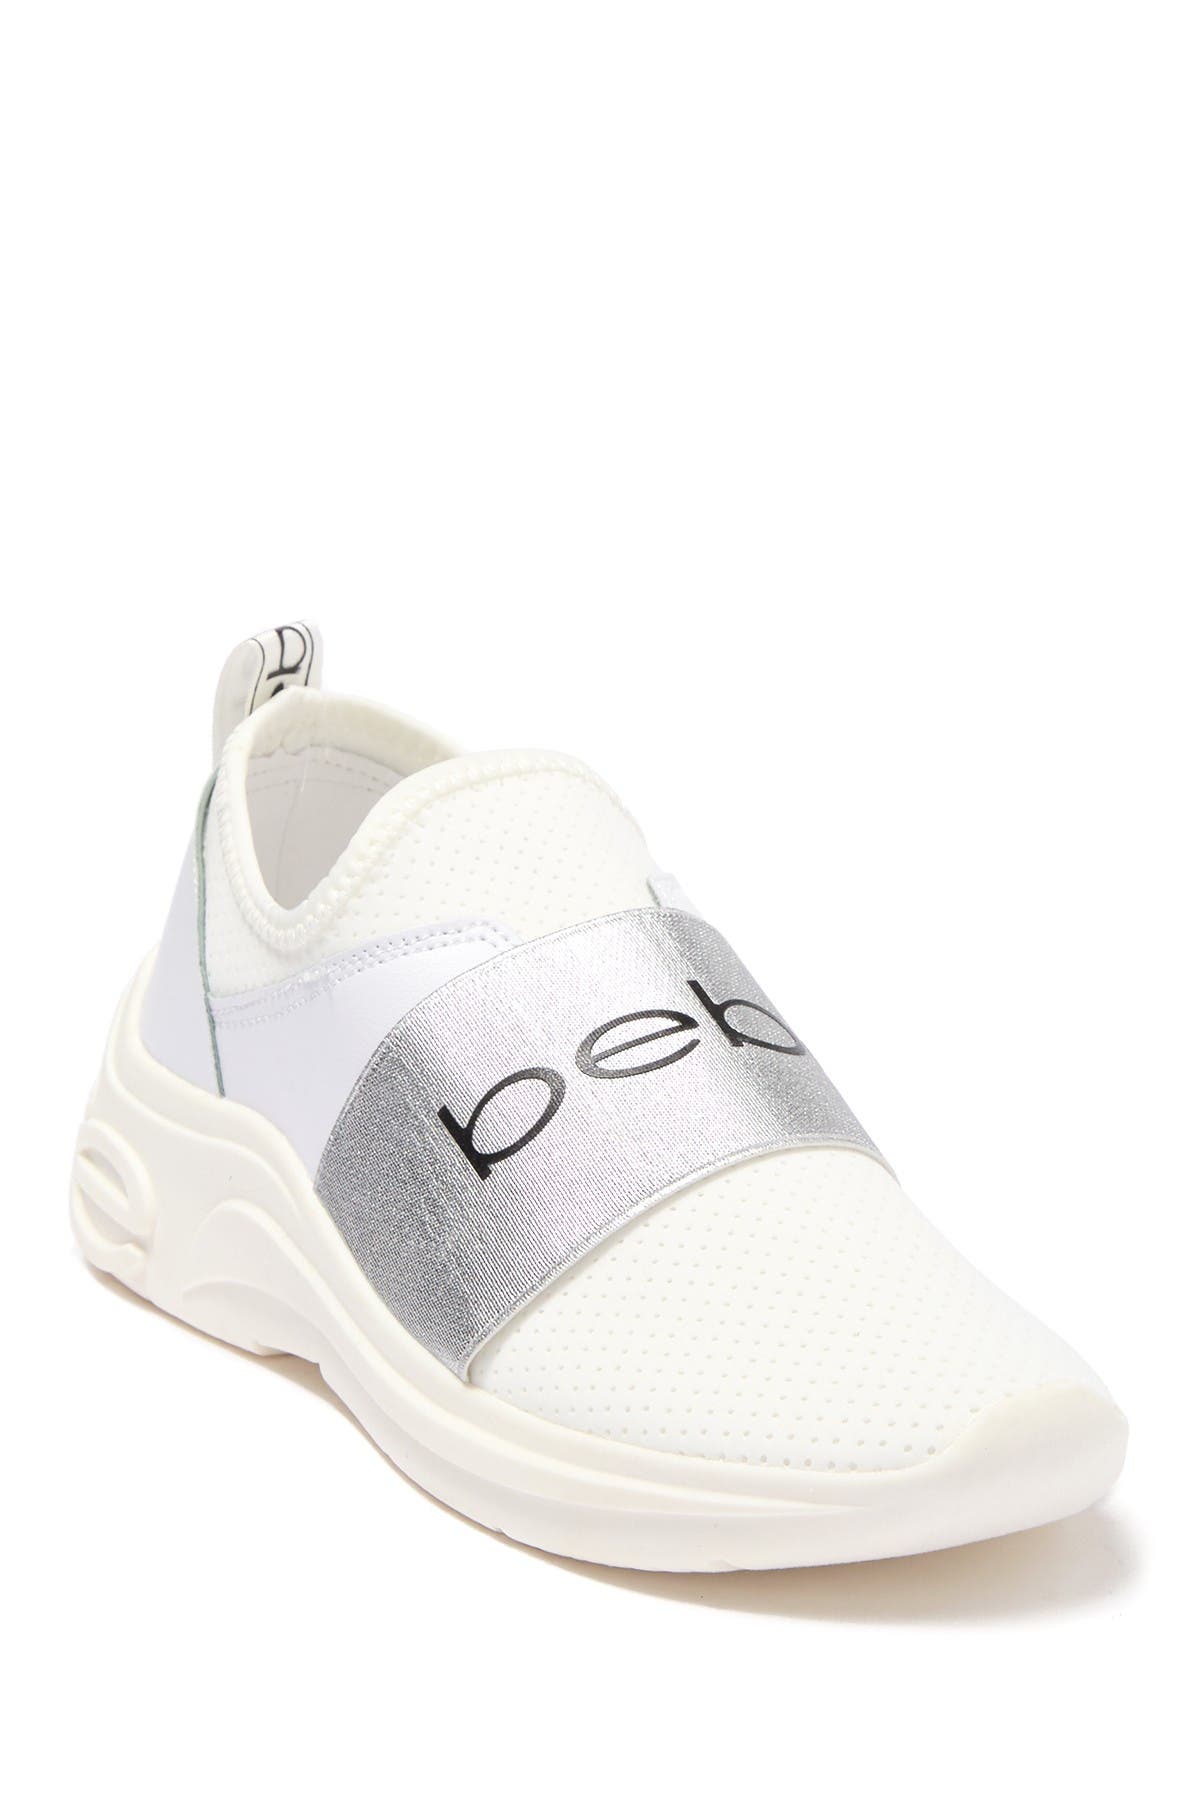 bebe | Ladd Slip-On Sneaker | Nordstrom 